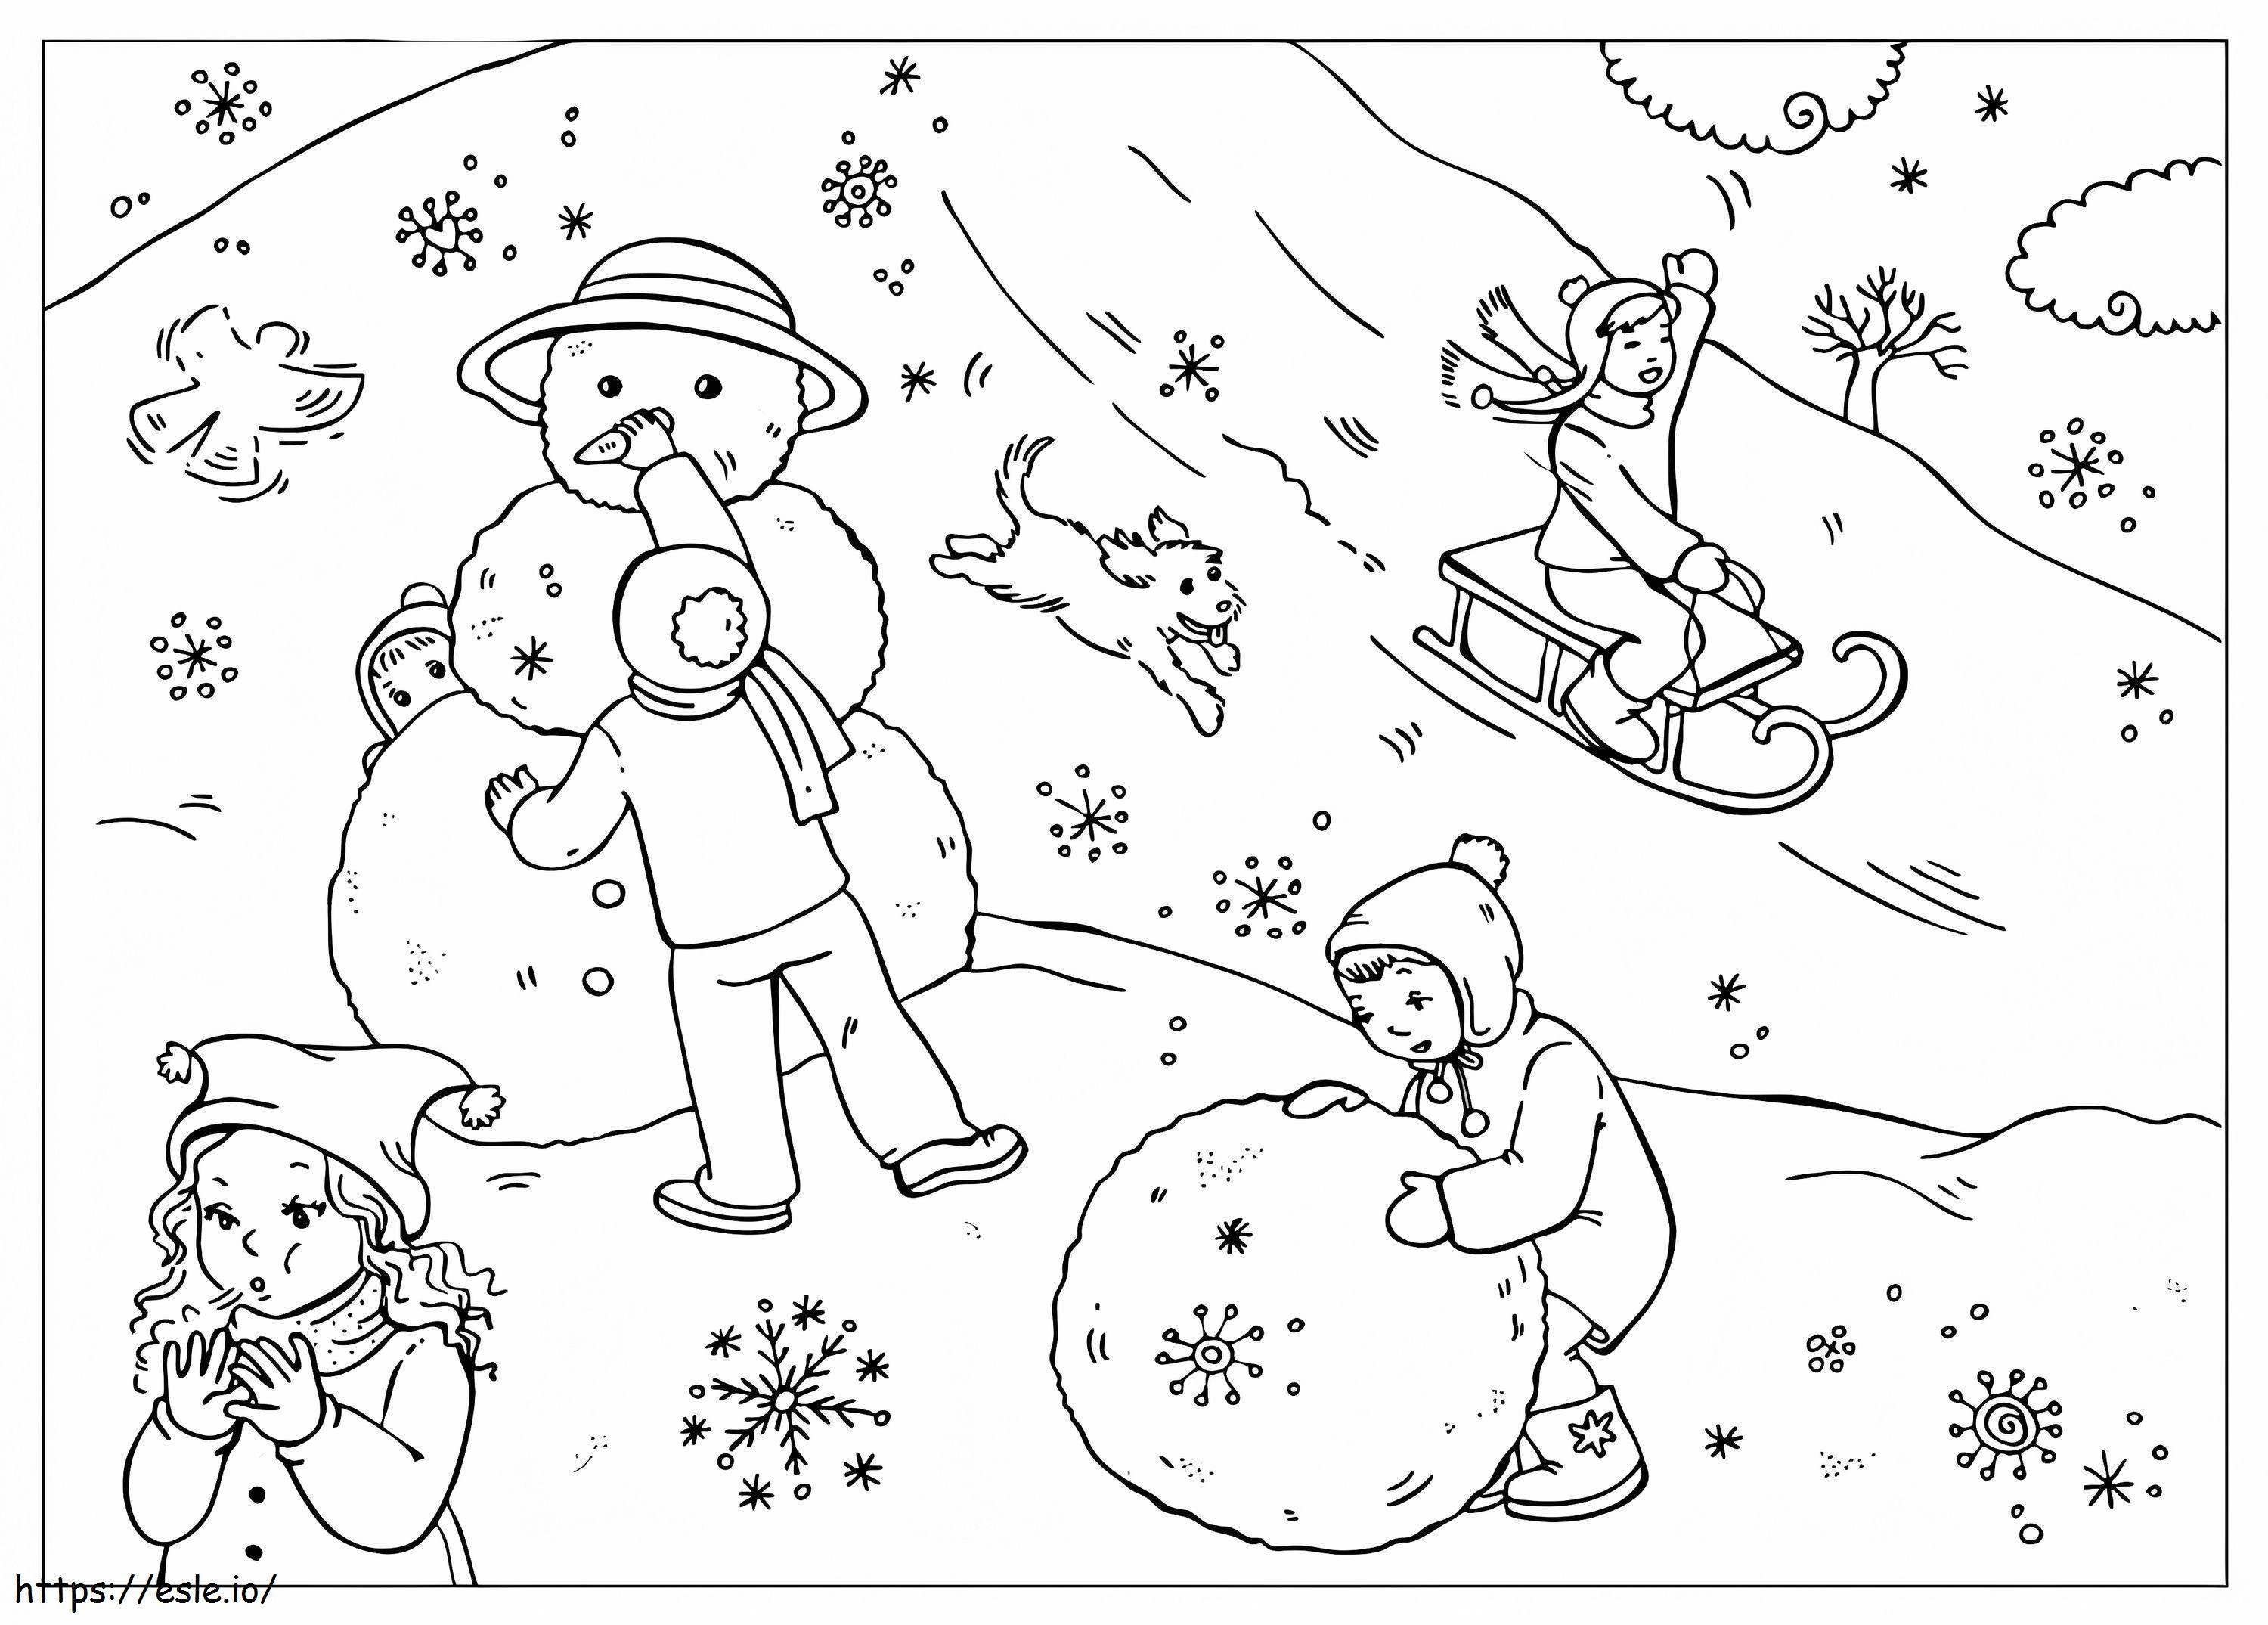 Winter Scene 1 1 coloring page